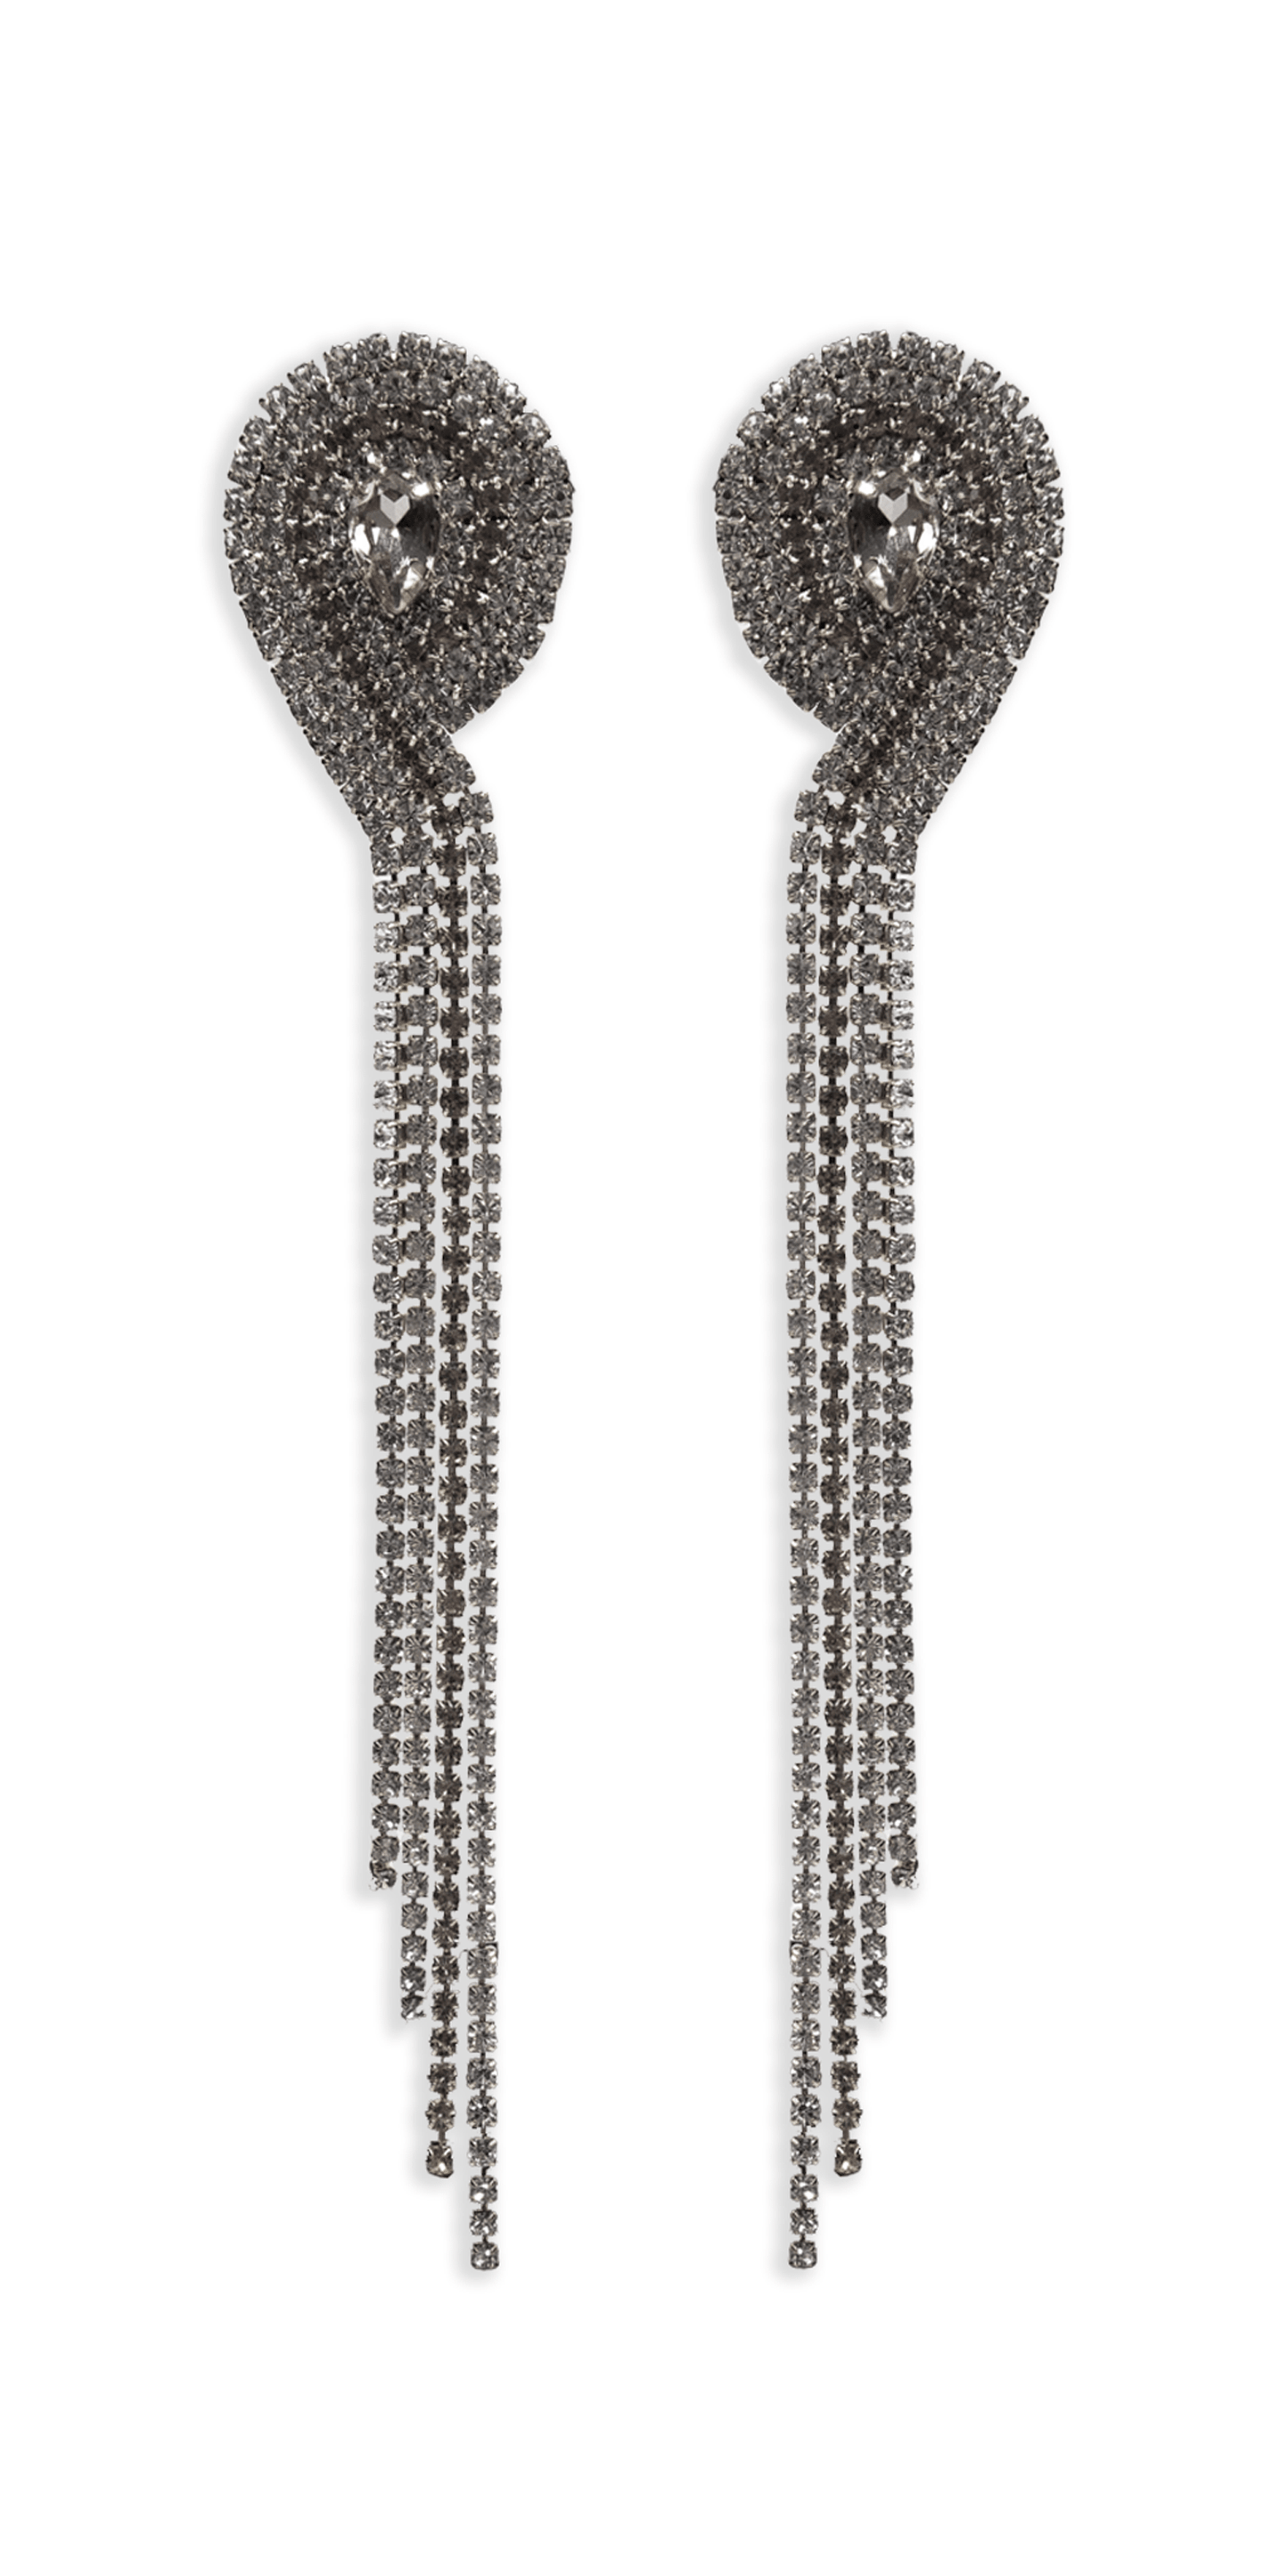 Camille La Vie 4 Strand Rhinestone Dangle Earrings OS / silver